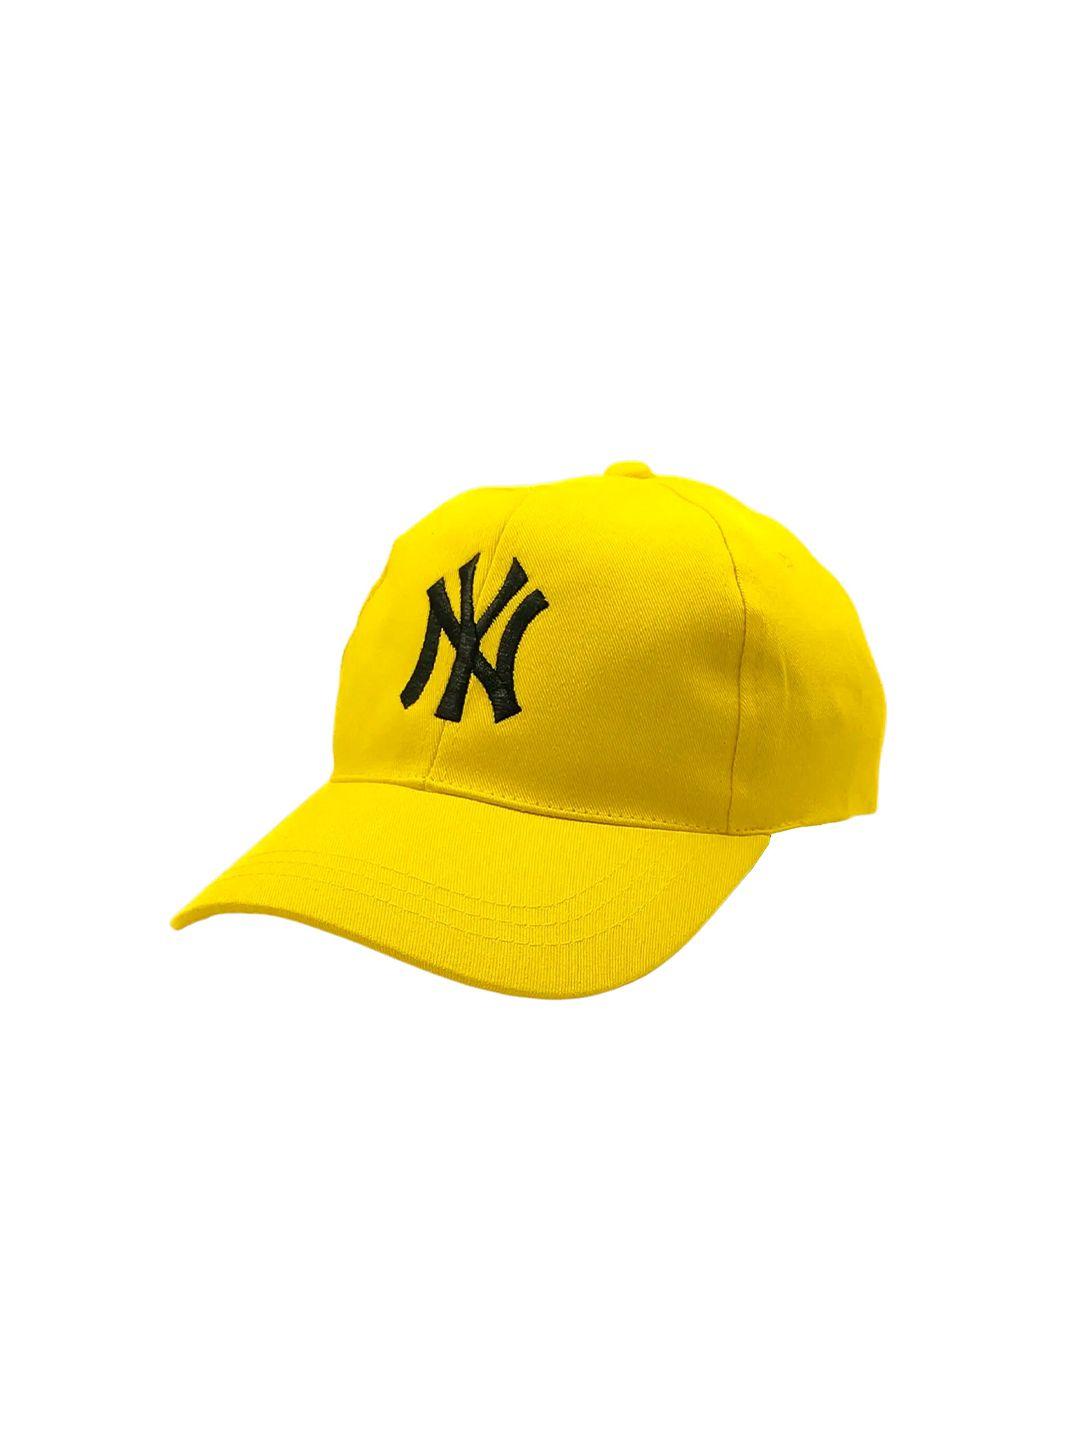 zacharias men yellow & black embroidered baseball cap